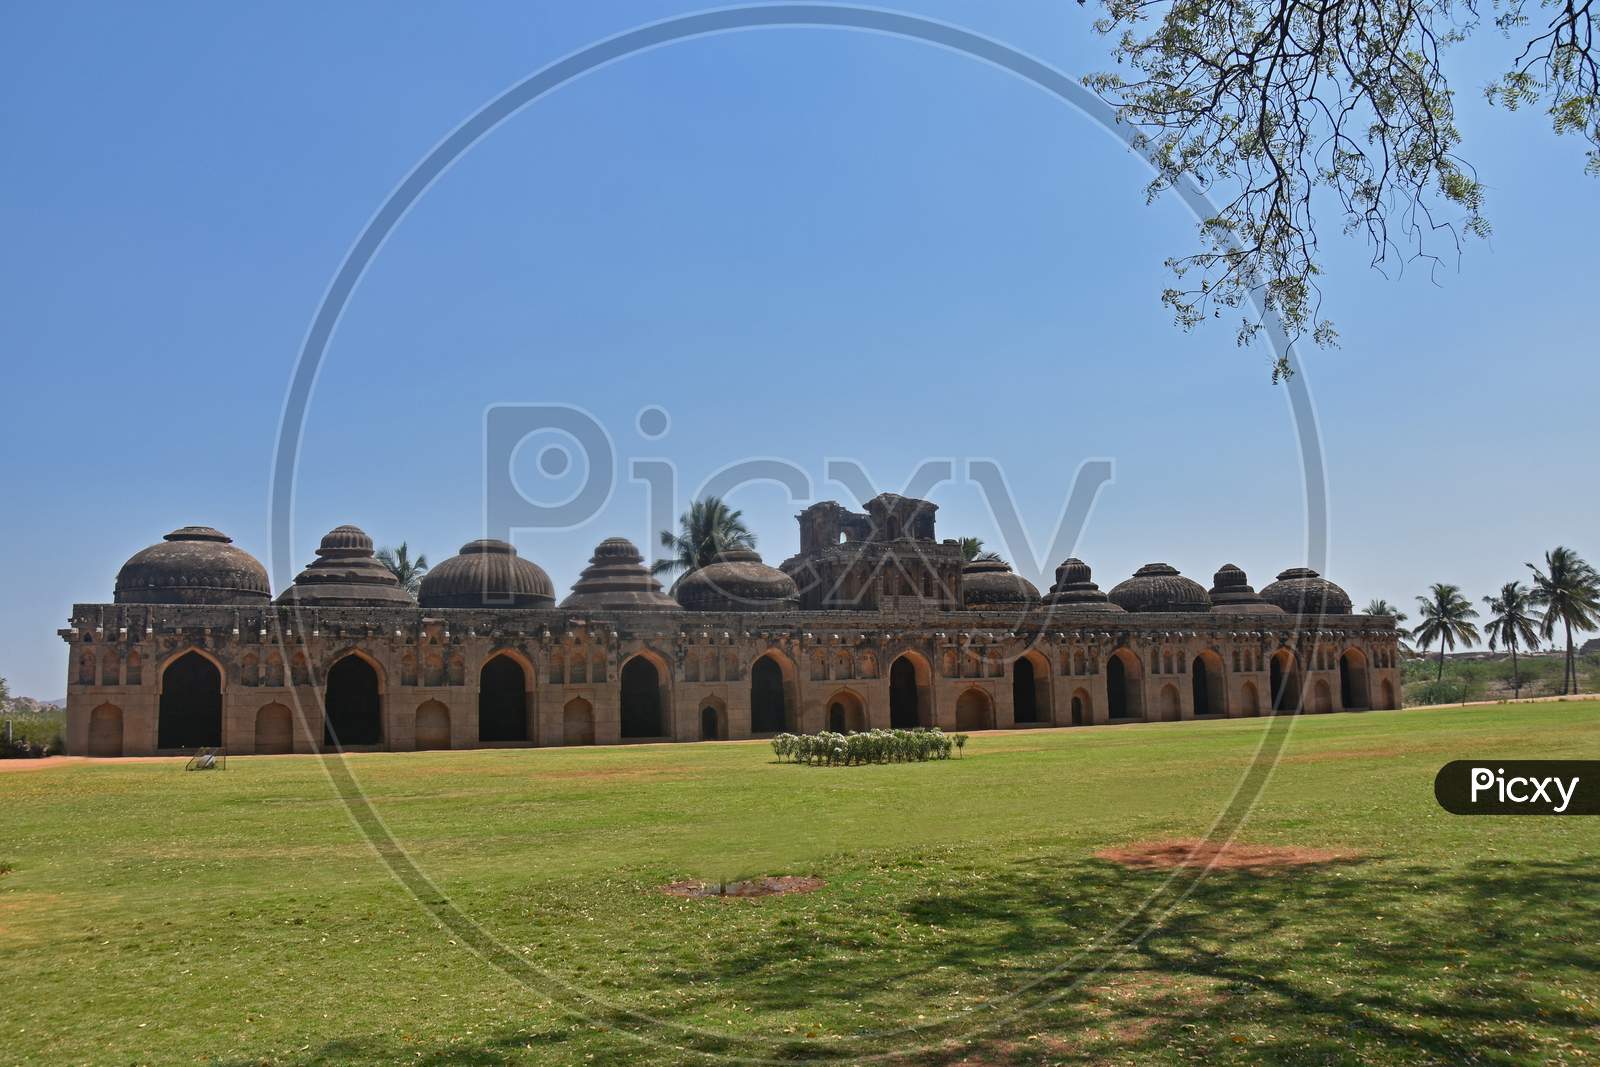 Ancient Ruins Of The Royal Elephant Stables At Hampi From 14Th Century Vijayanagara Kingdom. The Ancient City Of Vijayanagara, Hampi, Karnataka, India.